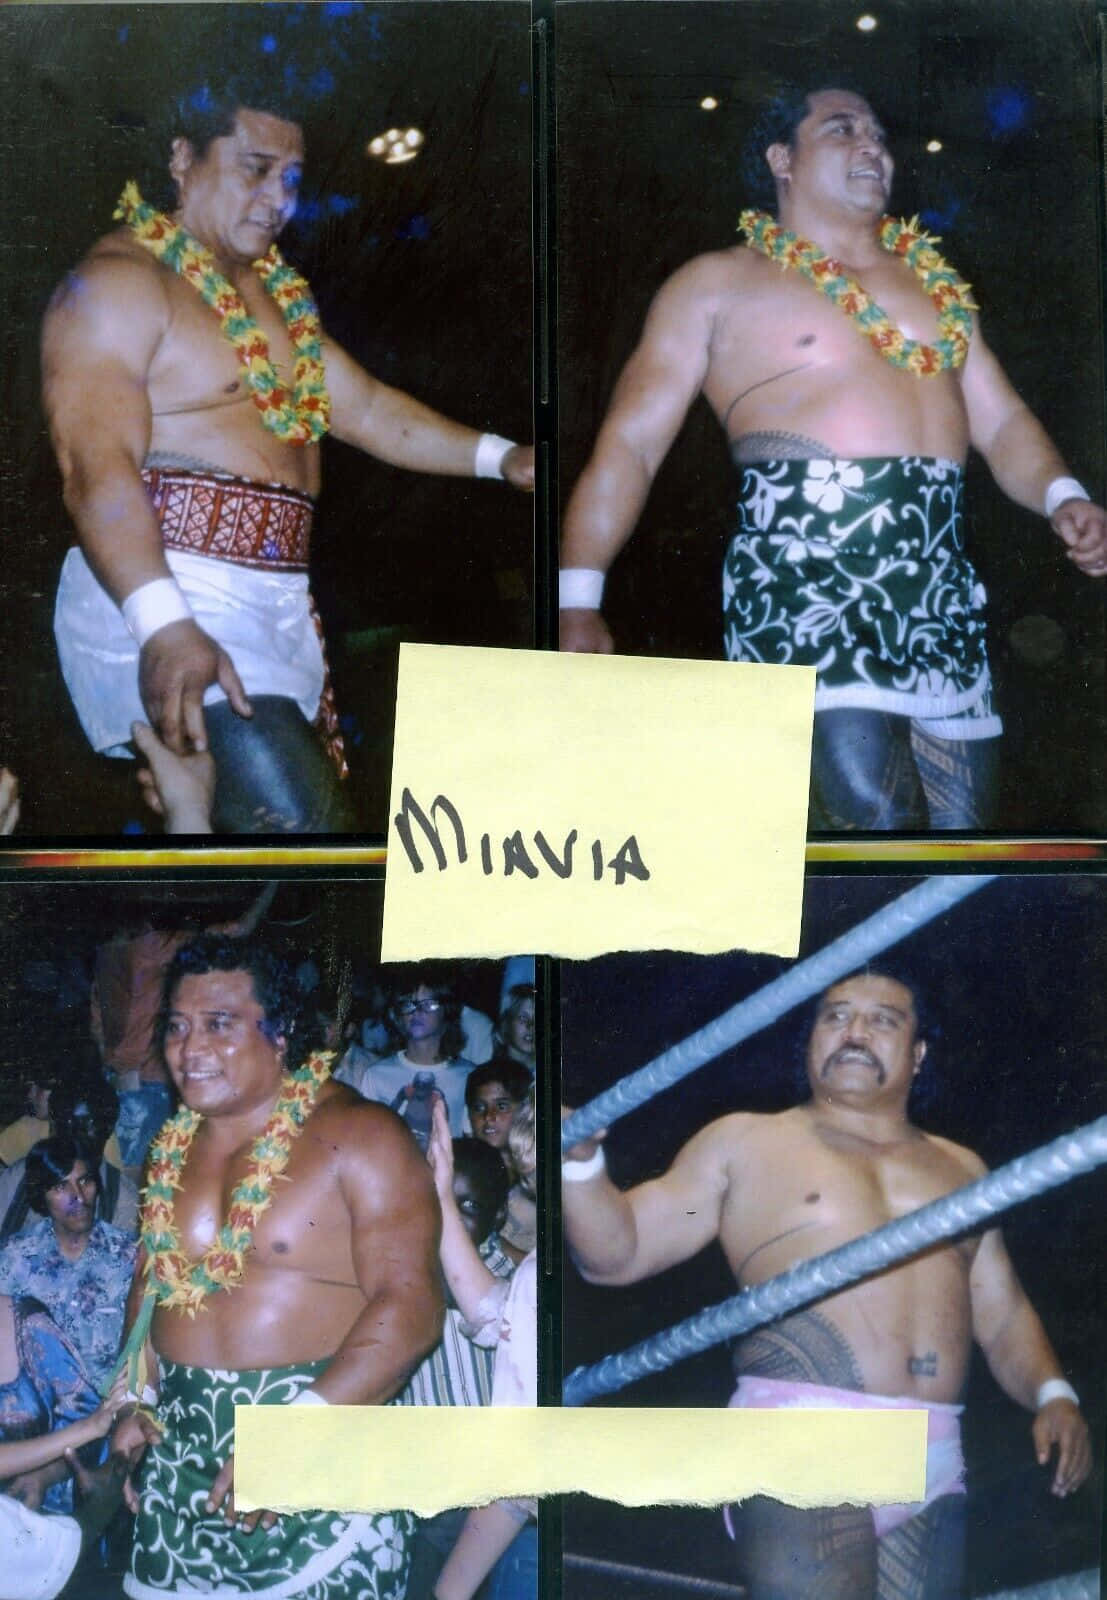 Petermaivias Wrestling-collage Wallpaper